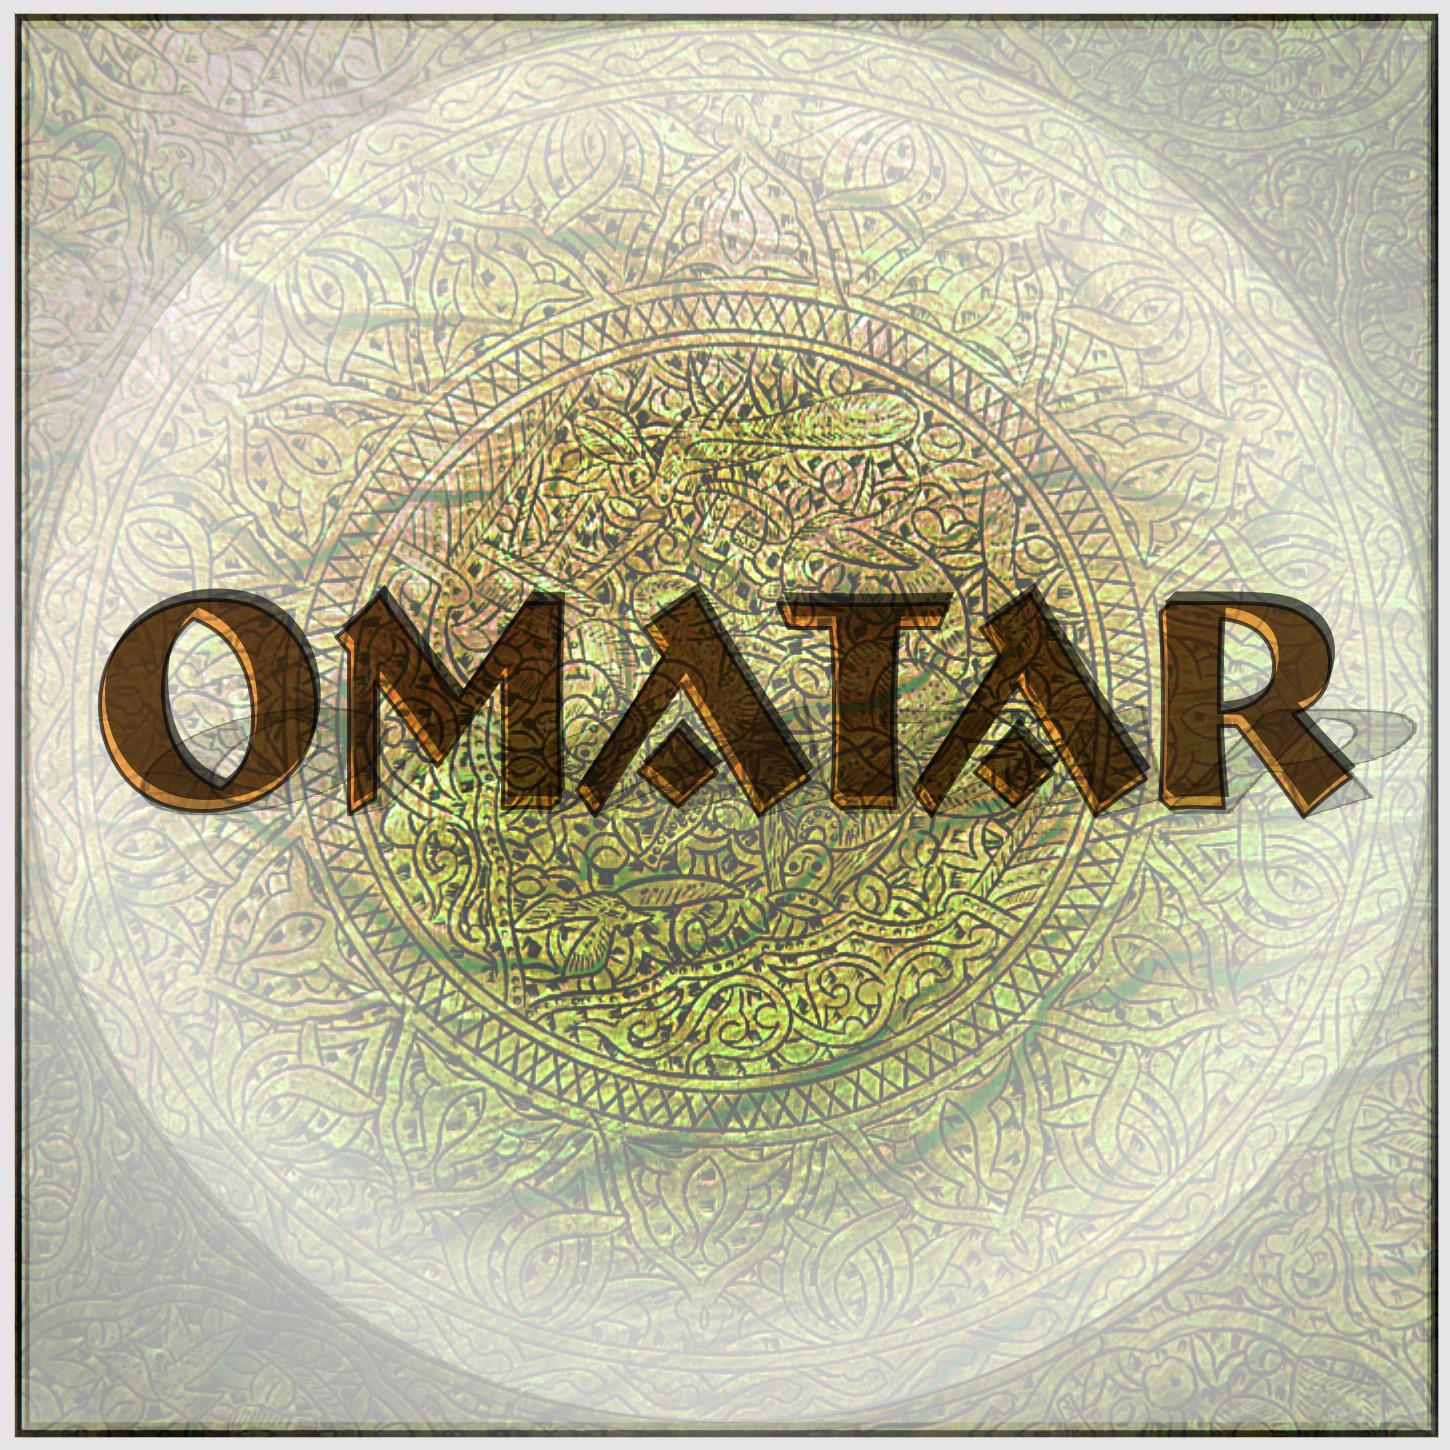 (c) Omatar.com